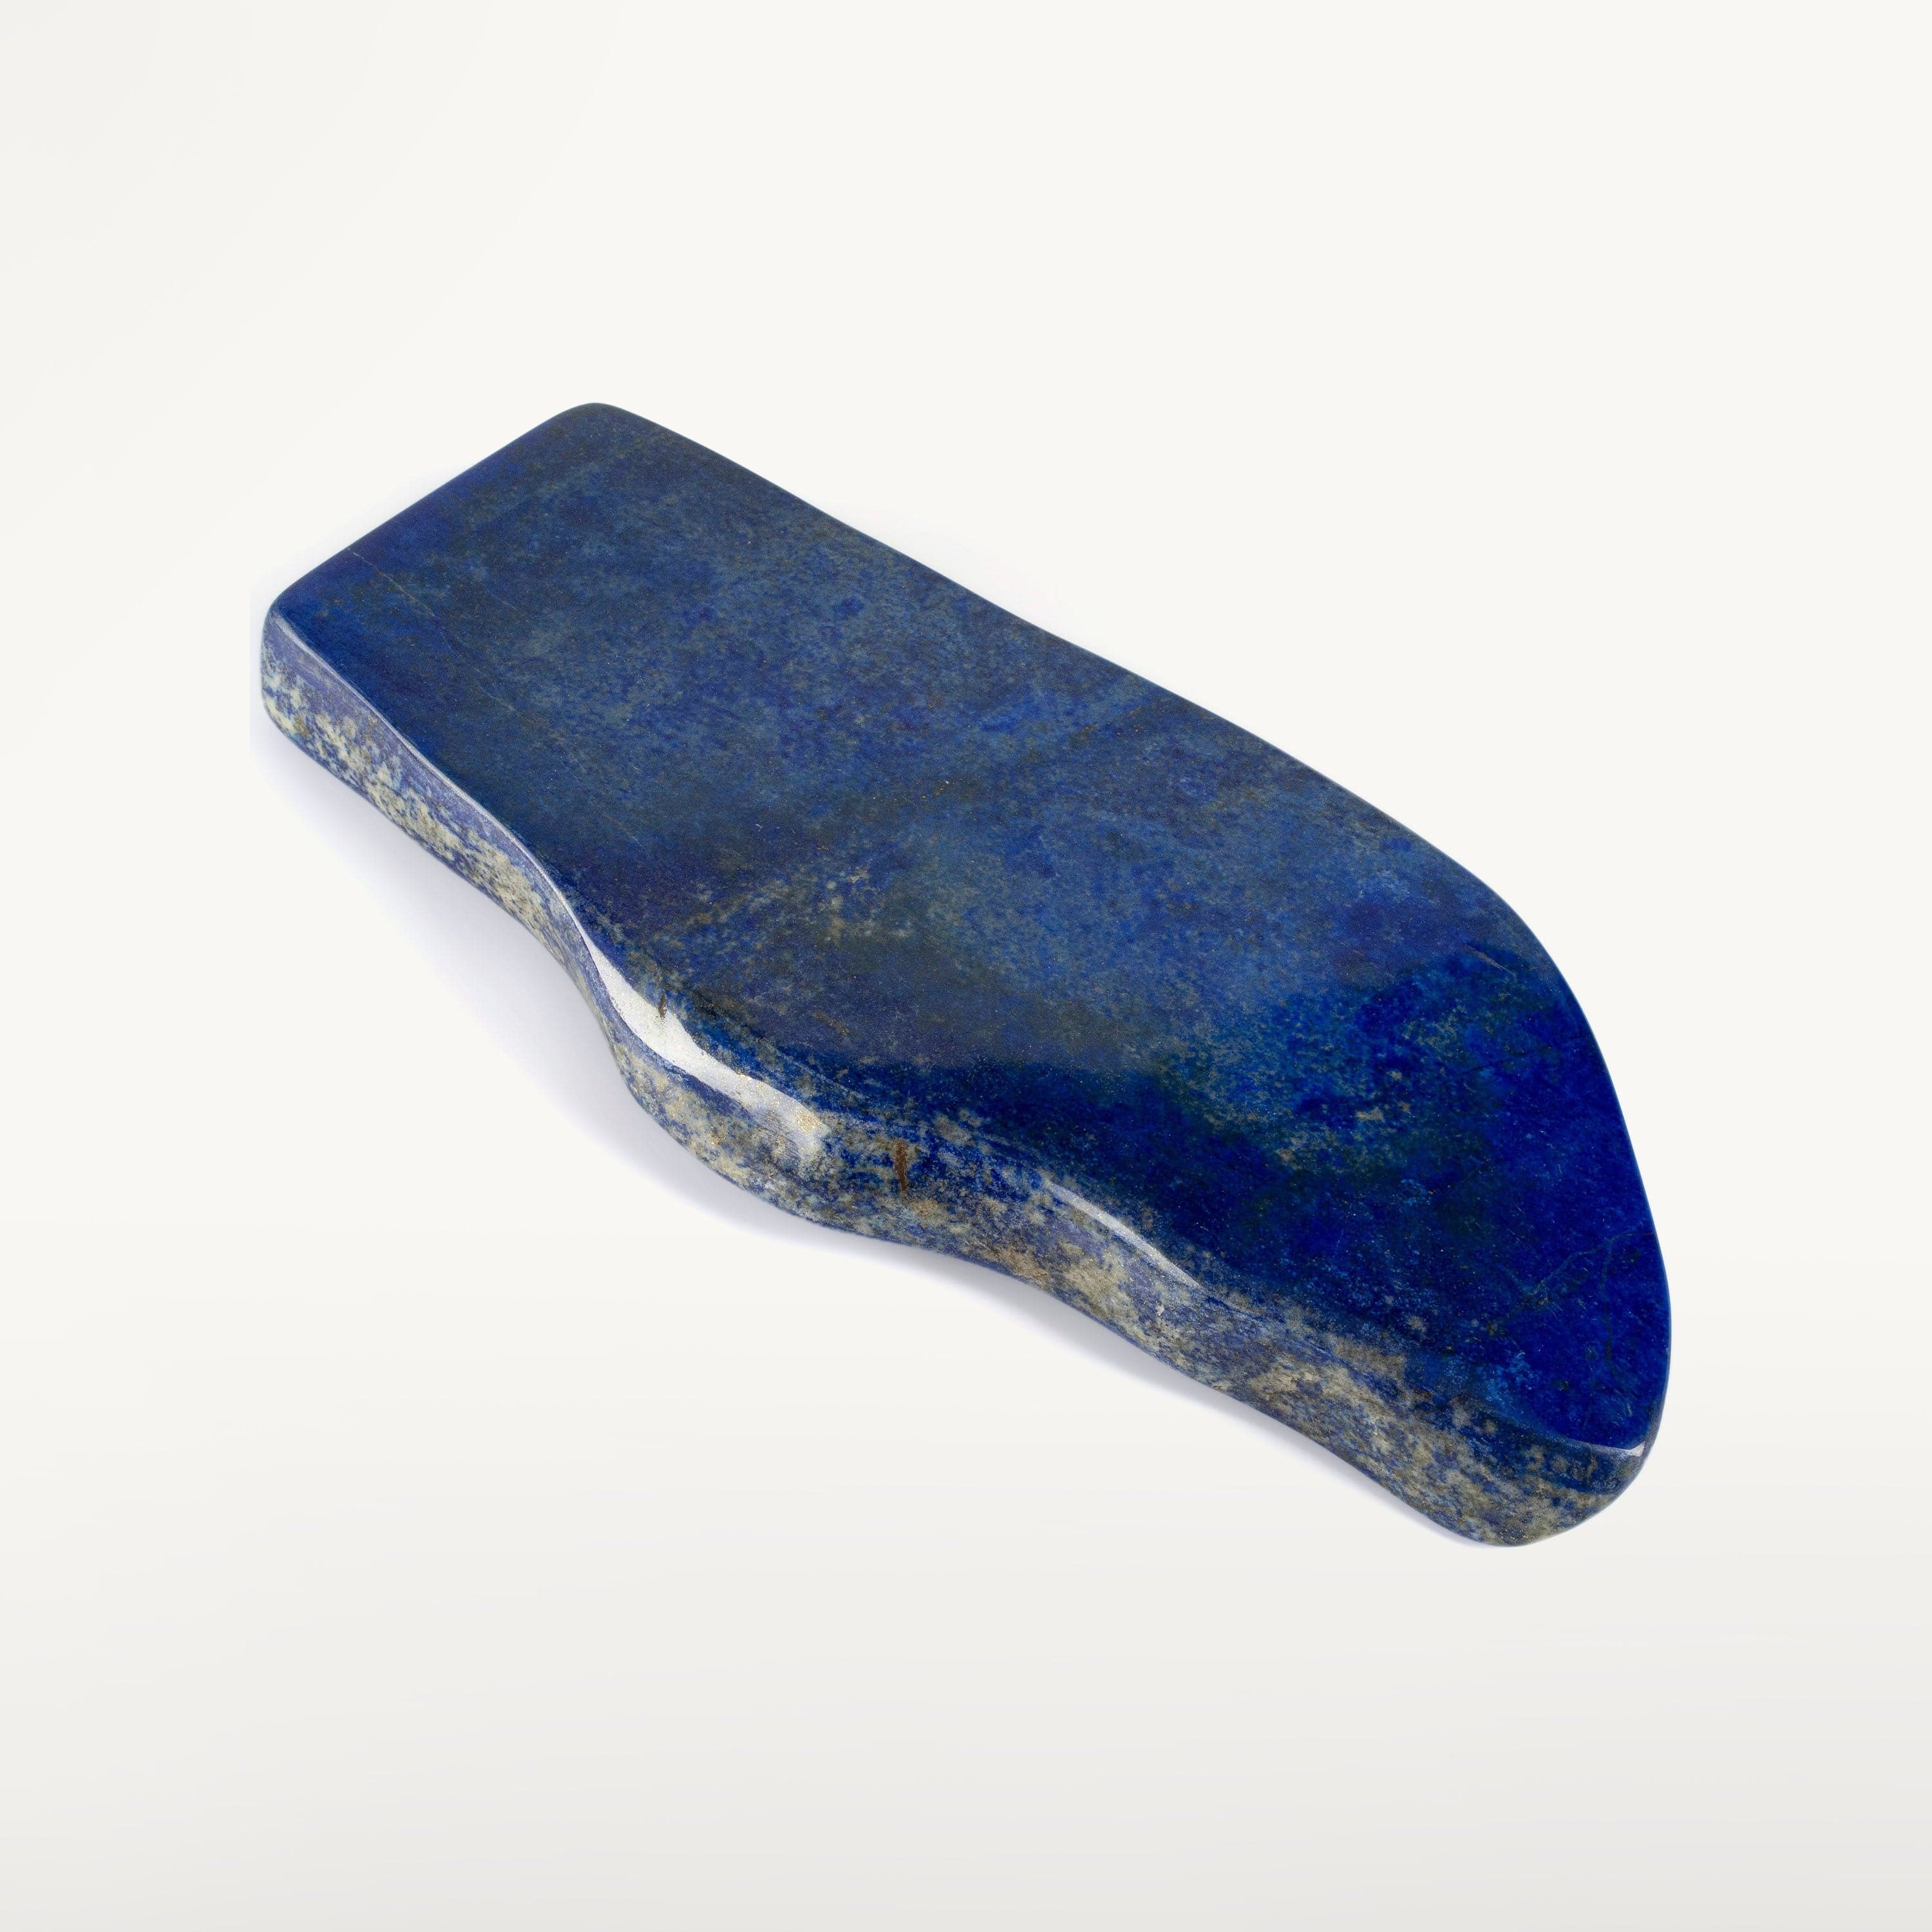 Kalifano Lapis Lapis Lazuli Freeform from Afghanistan - 12" / 2,180 grams LP2200.001